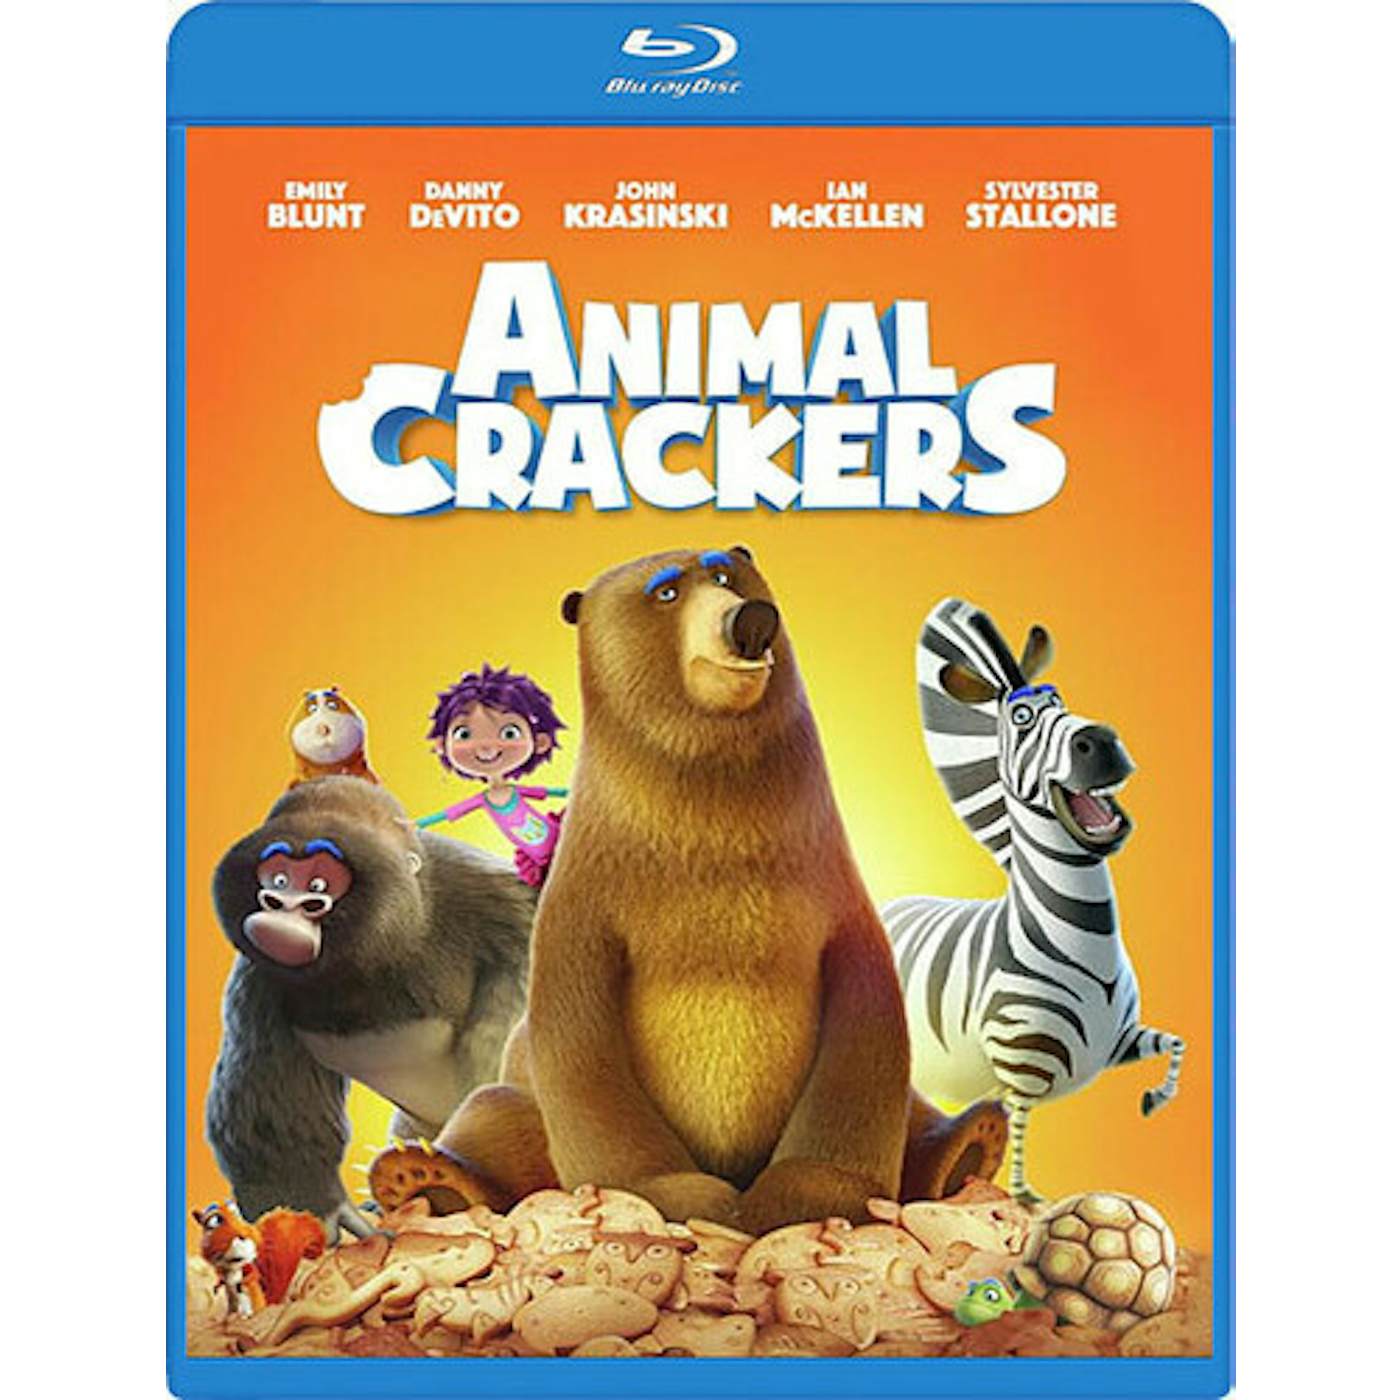 The Animal Crackers Blu-ray